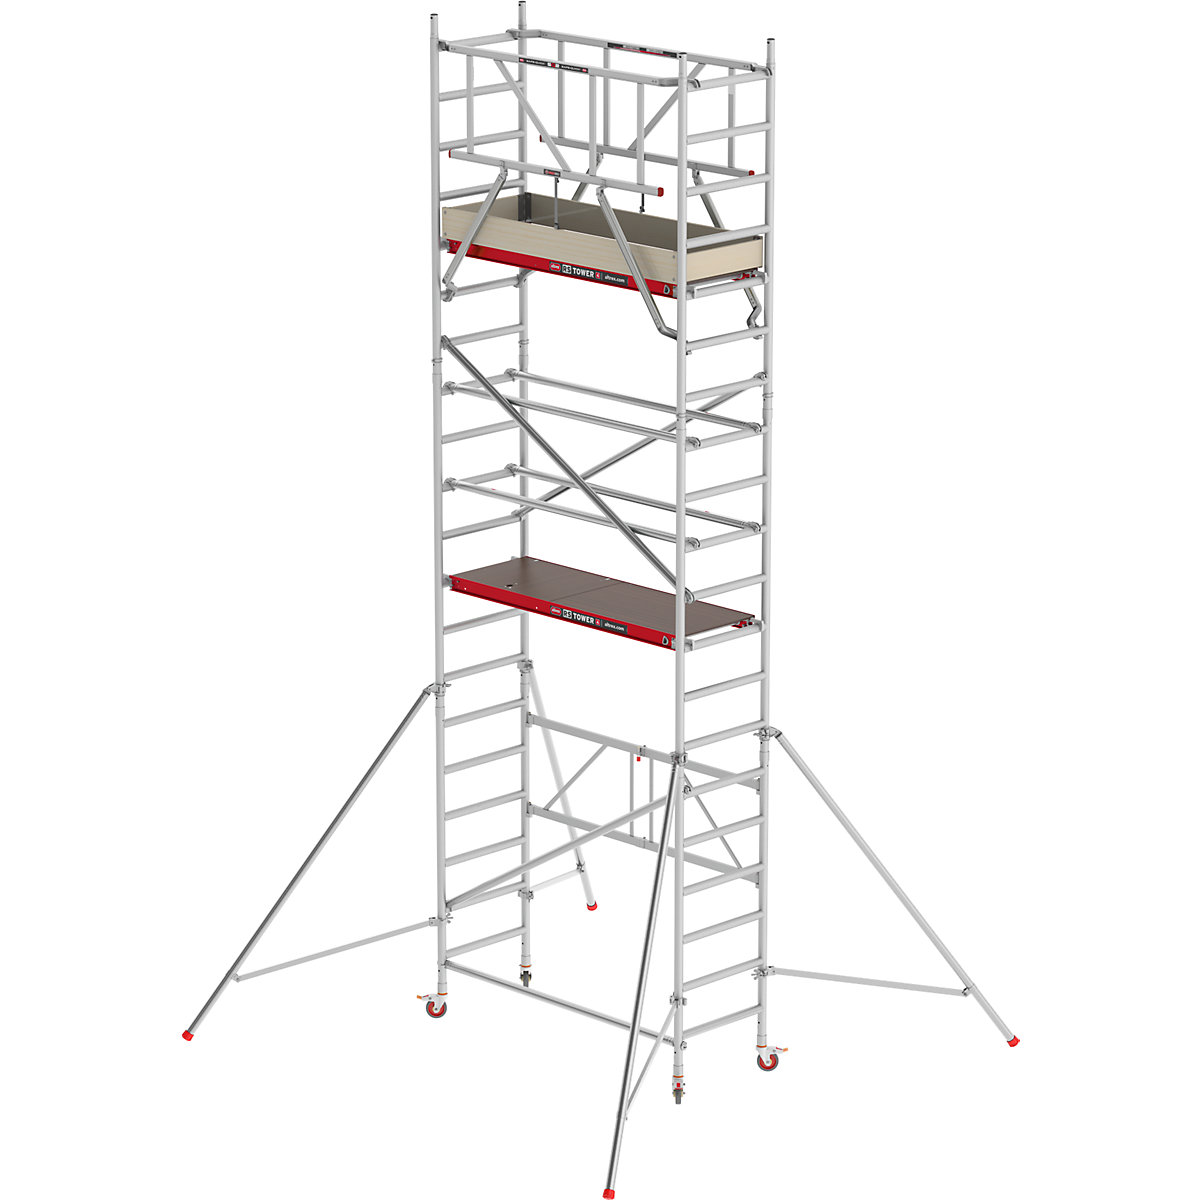 RS 44-POWER folding tower – Altrex, wooden platform, length 1.85 m, working height 6.80 m-8